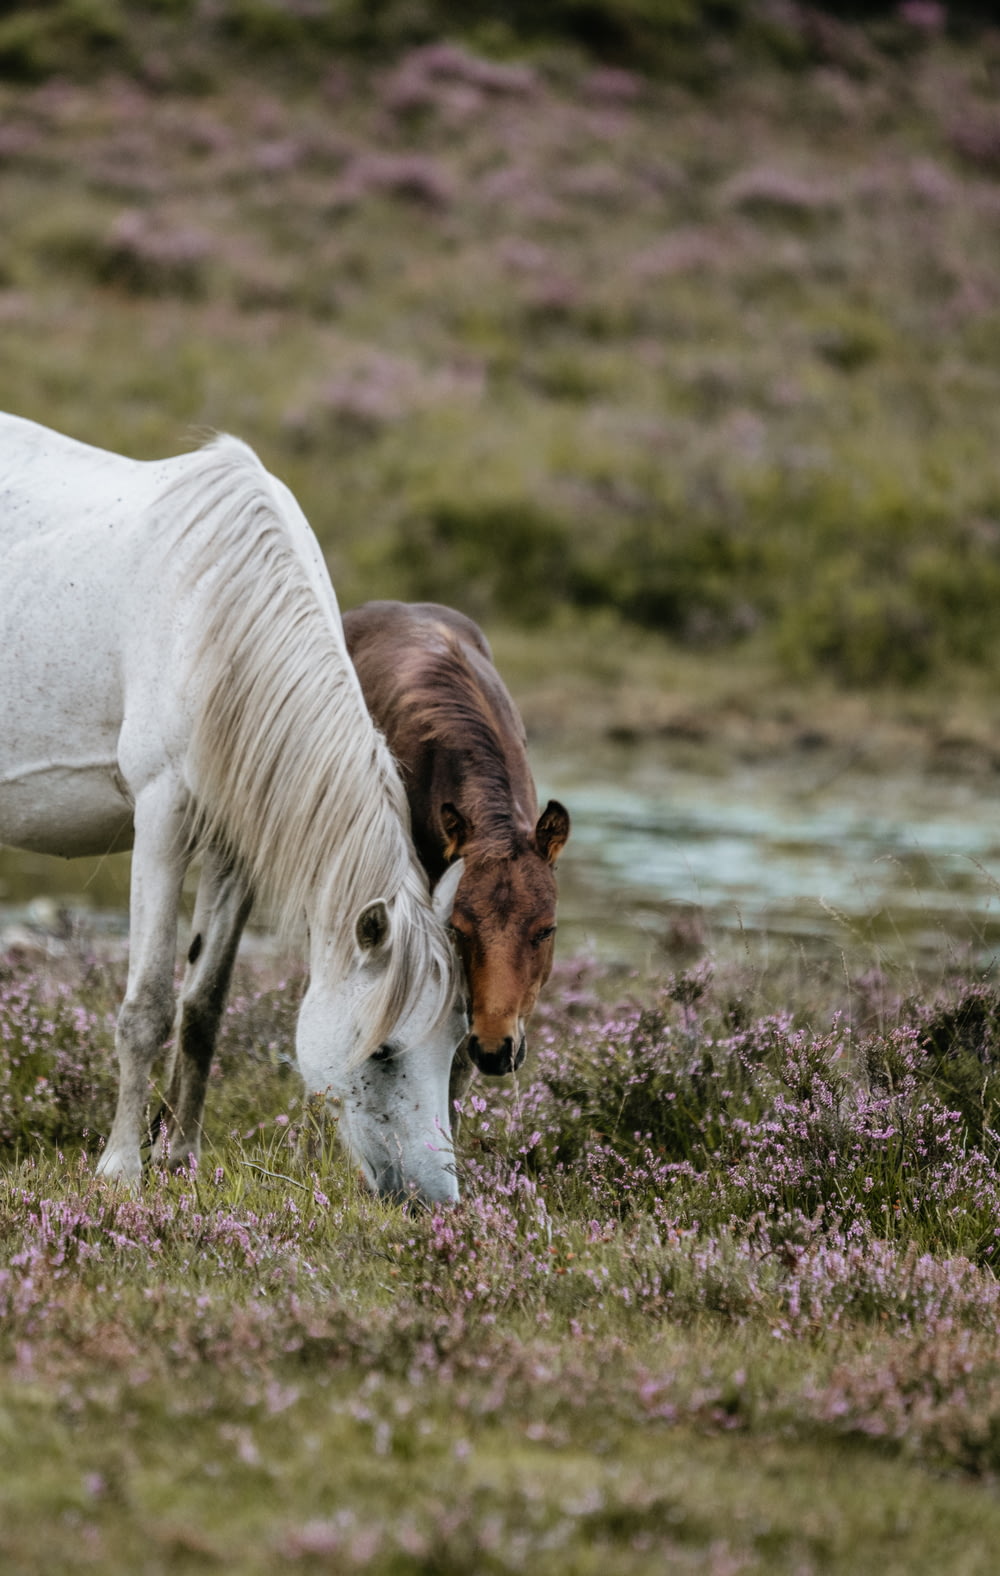 white horse standing near brown horse feeding on grass